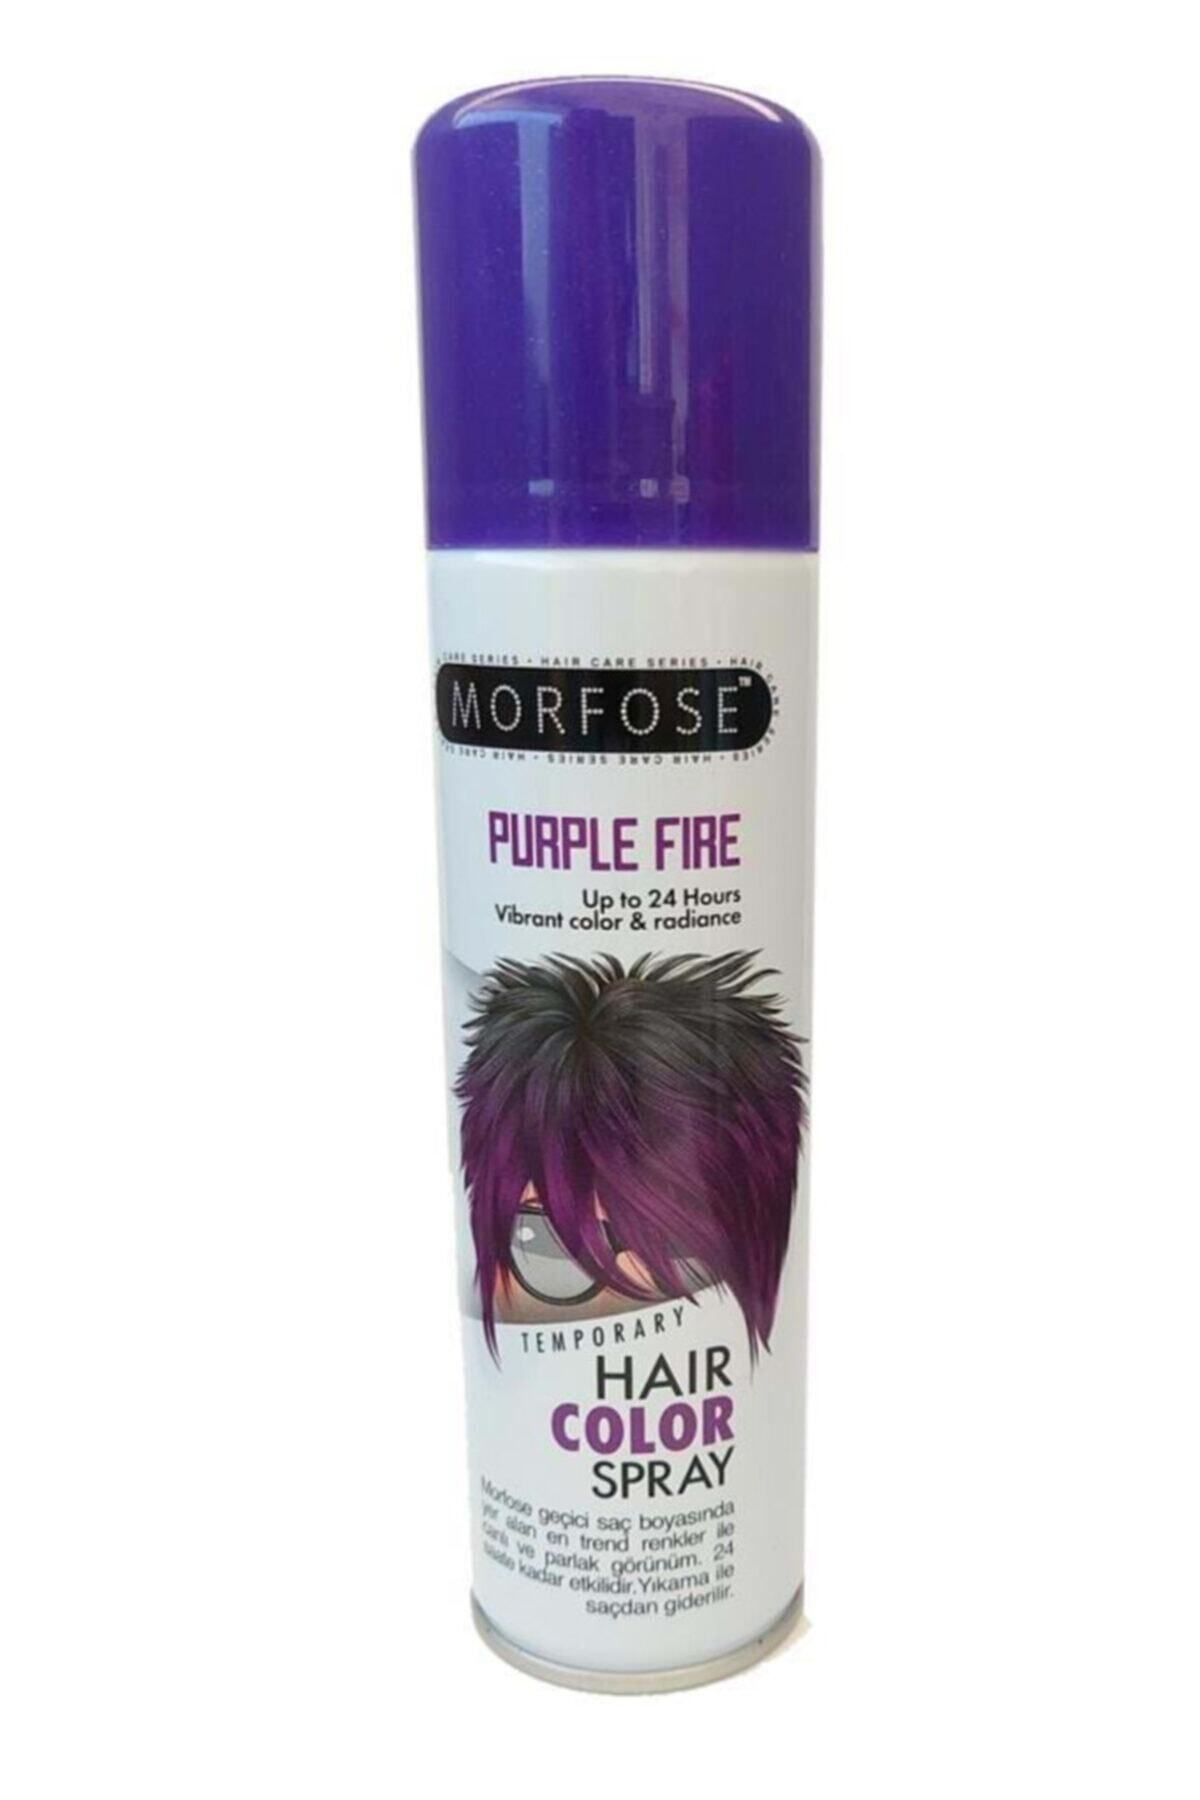 Morfose Mech 24 Saate Kadar Etkili Mor Renkli Saç Spreyi Purple Fire 150 ml